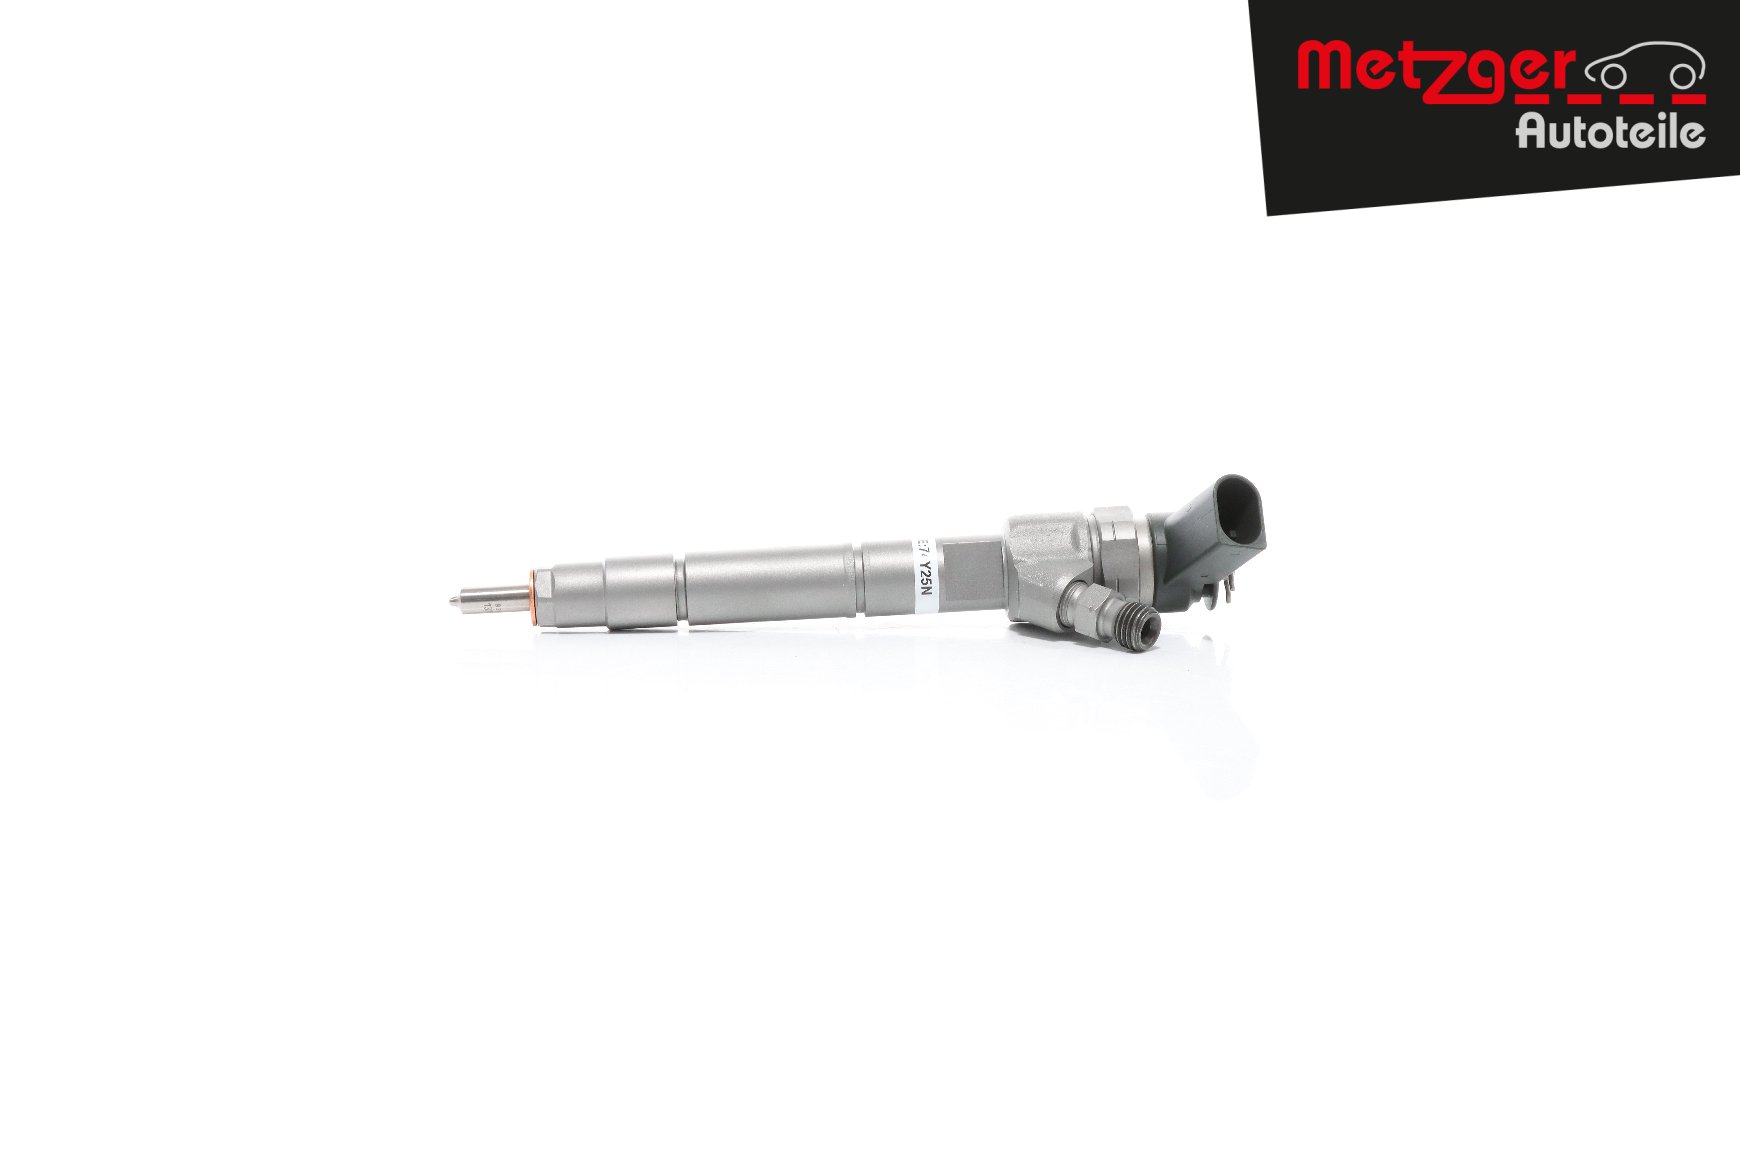 METZGER Injector diesel and petrol Mercedes W169 new 0870044